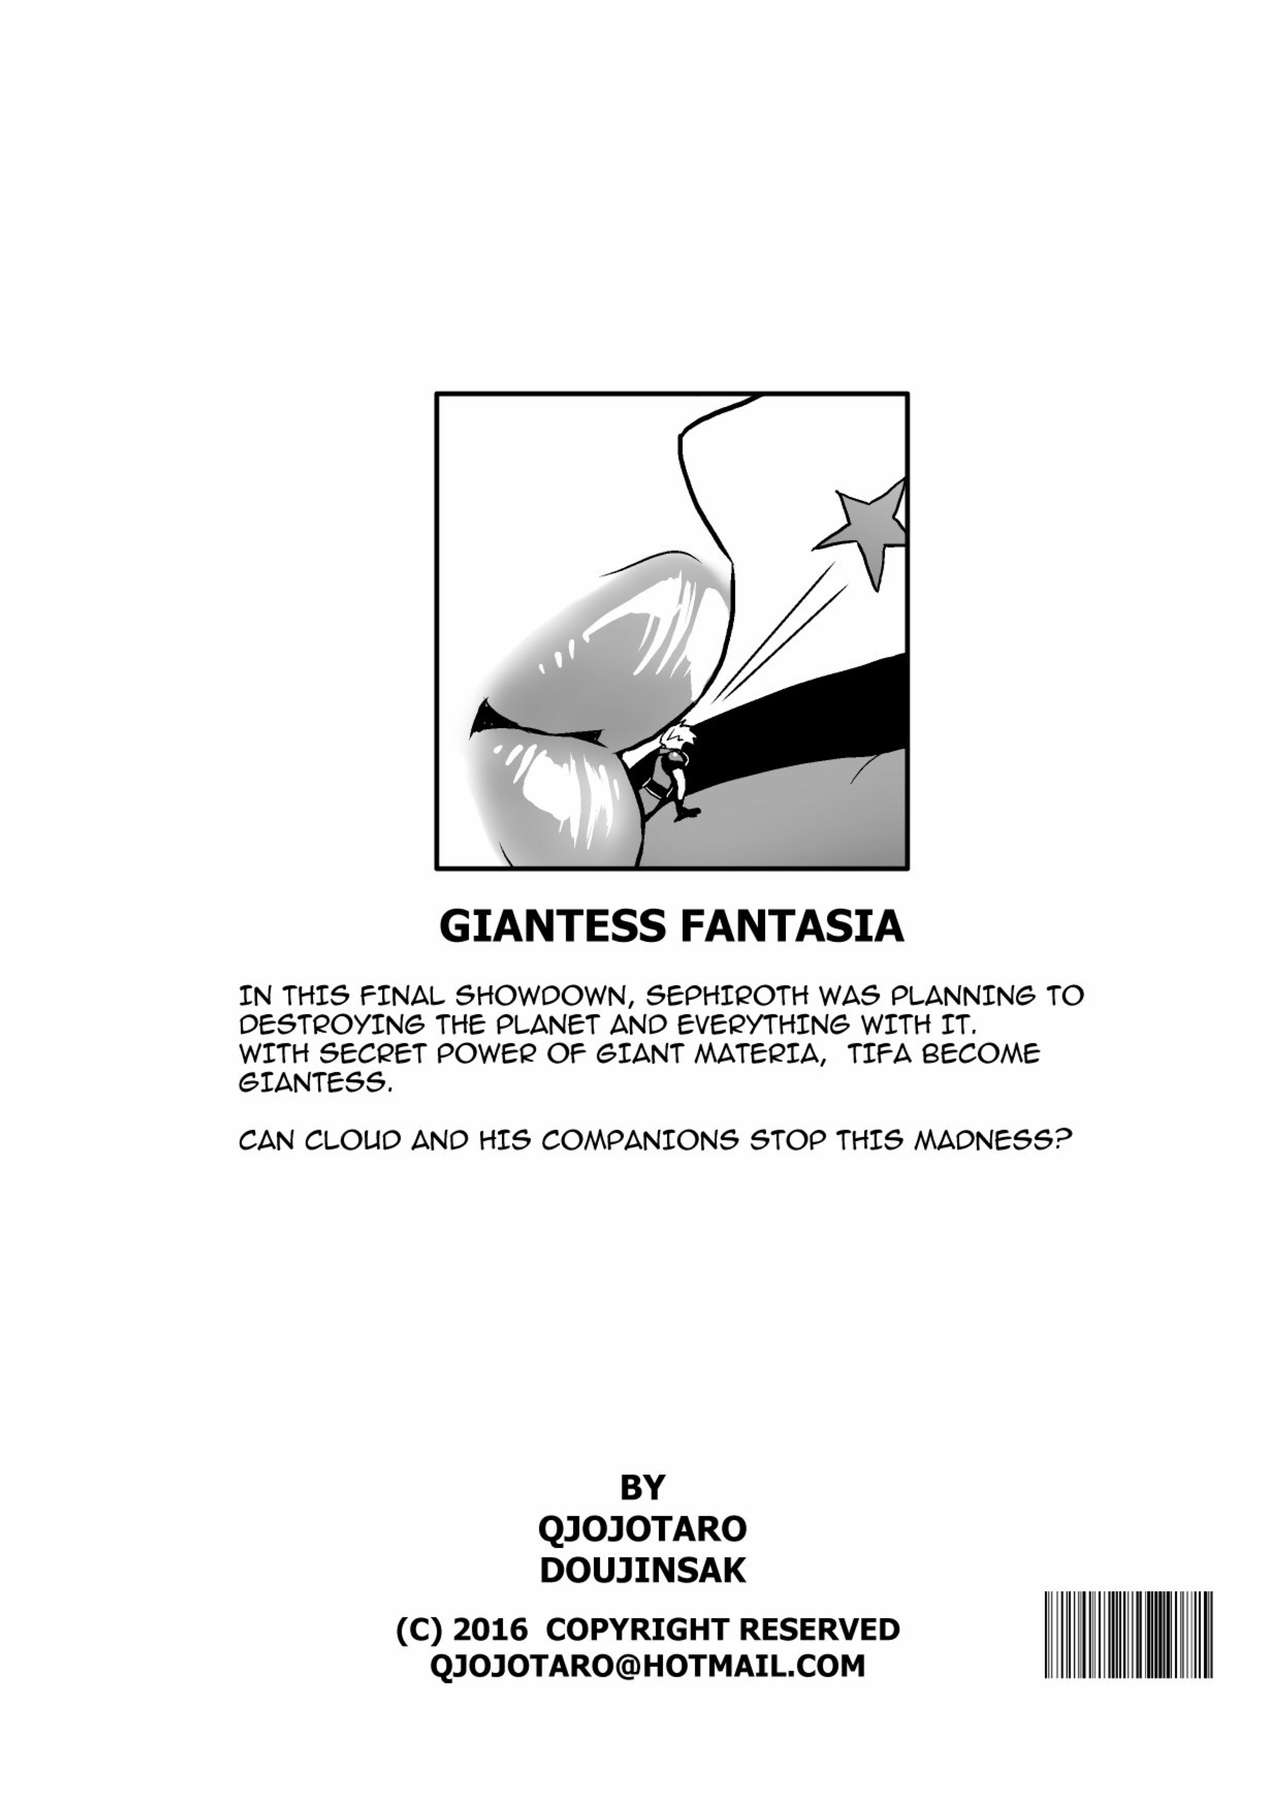 Giantess Fantasia Final Fantasy 7 02